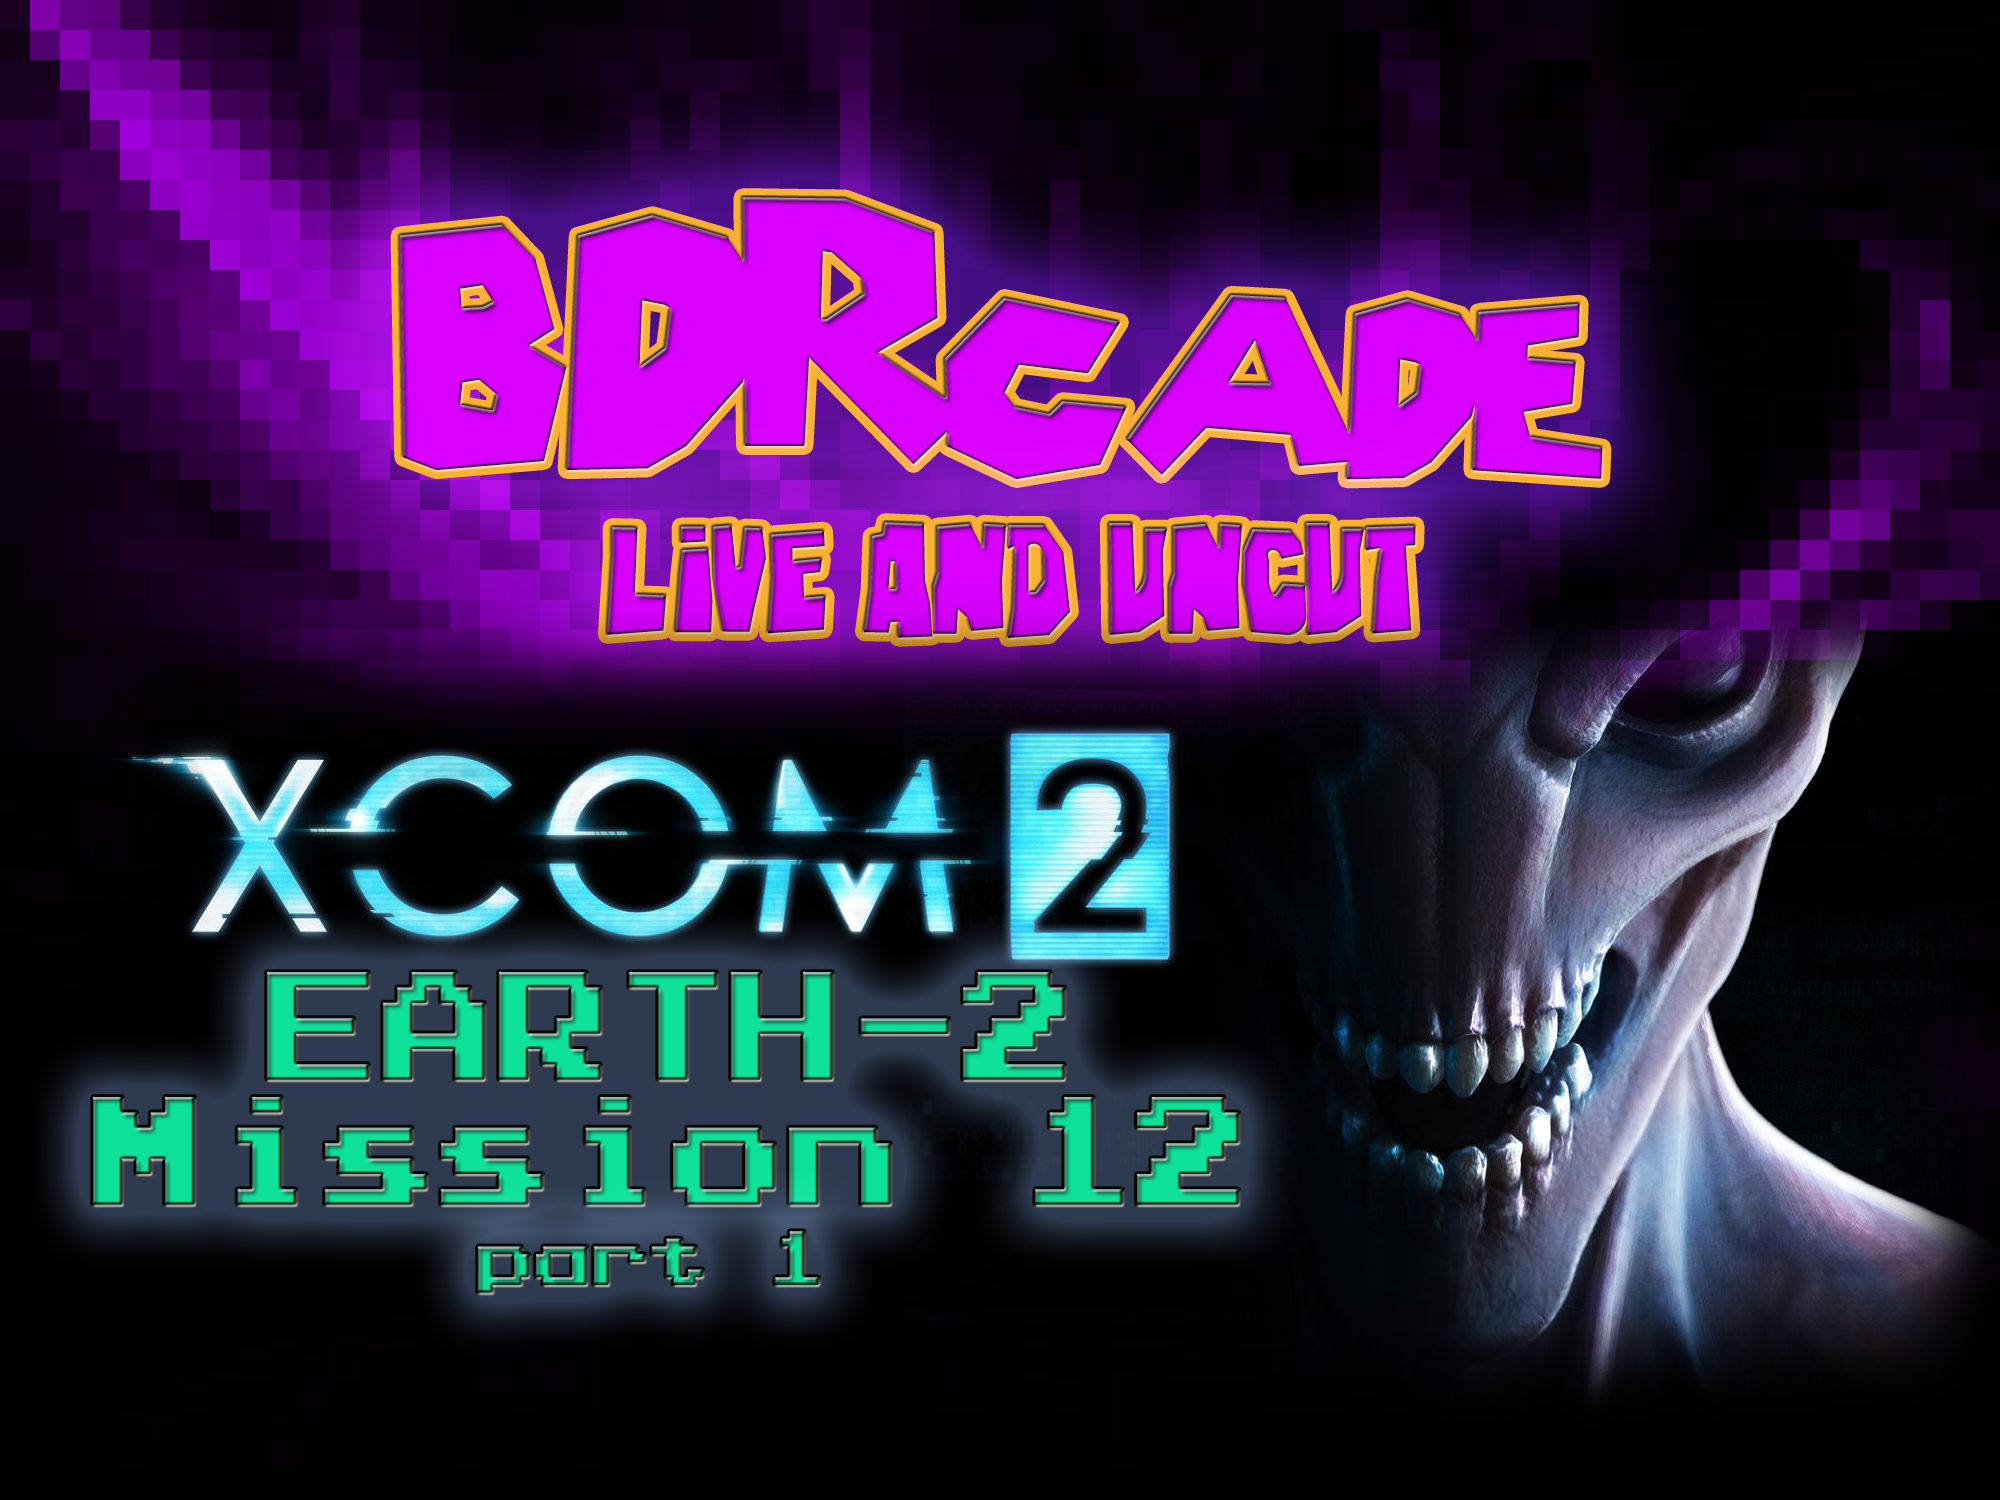 XCOM 2 (Earth-2) : Mission 12 Part 1 – A BDRcade Live Stream